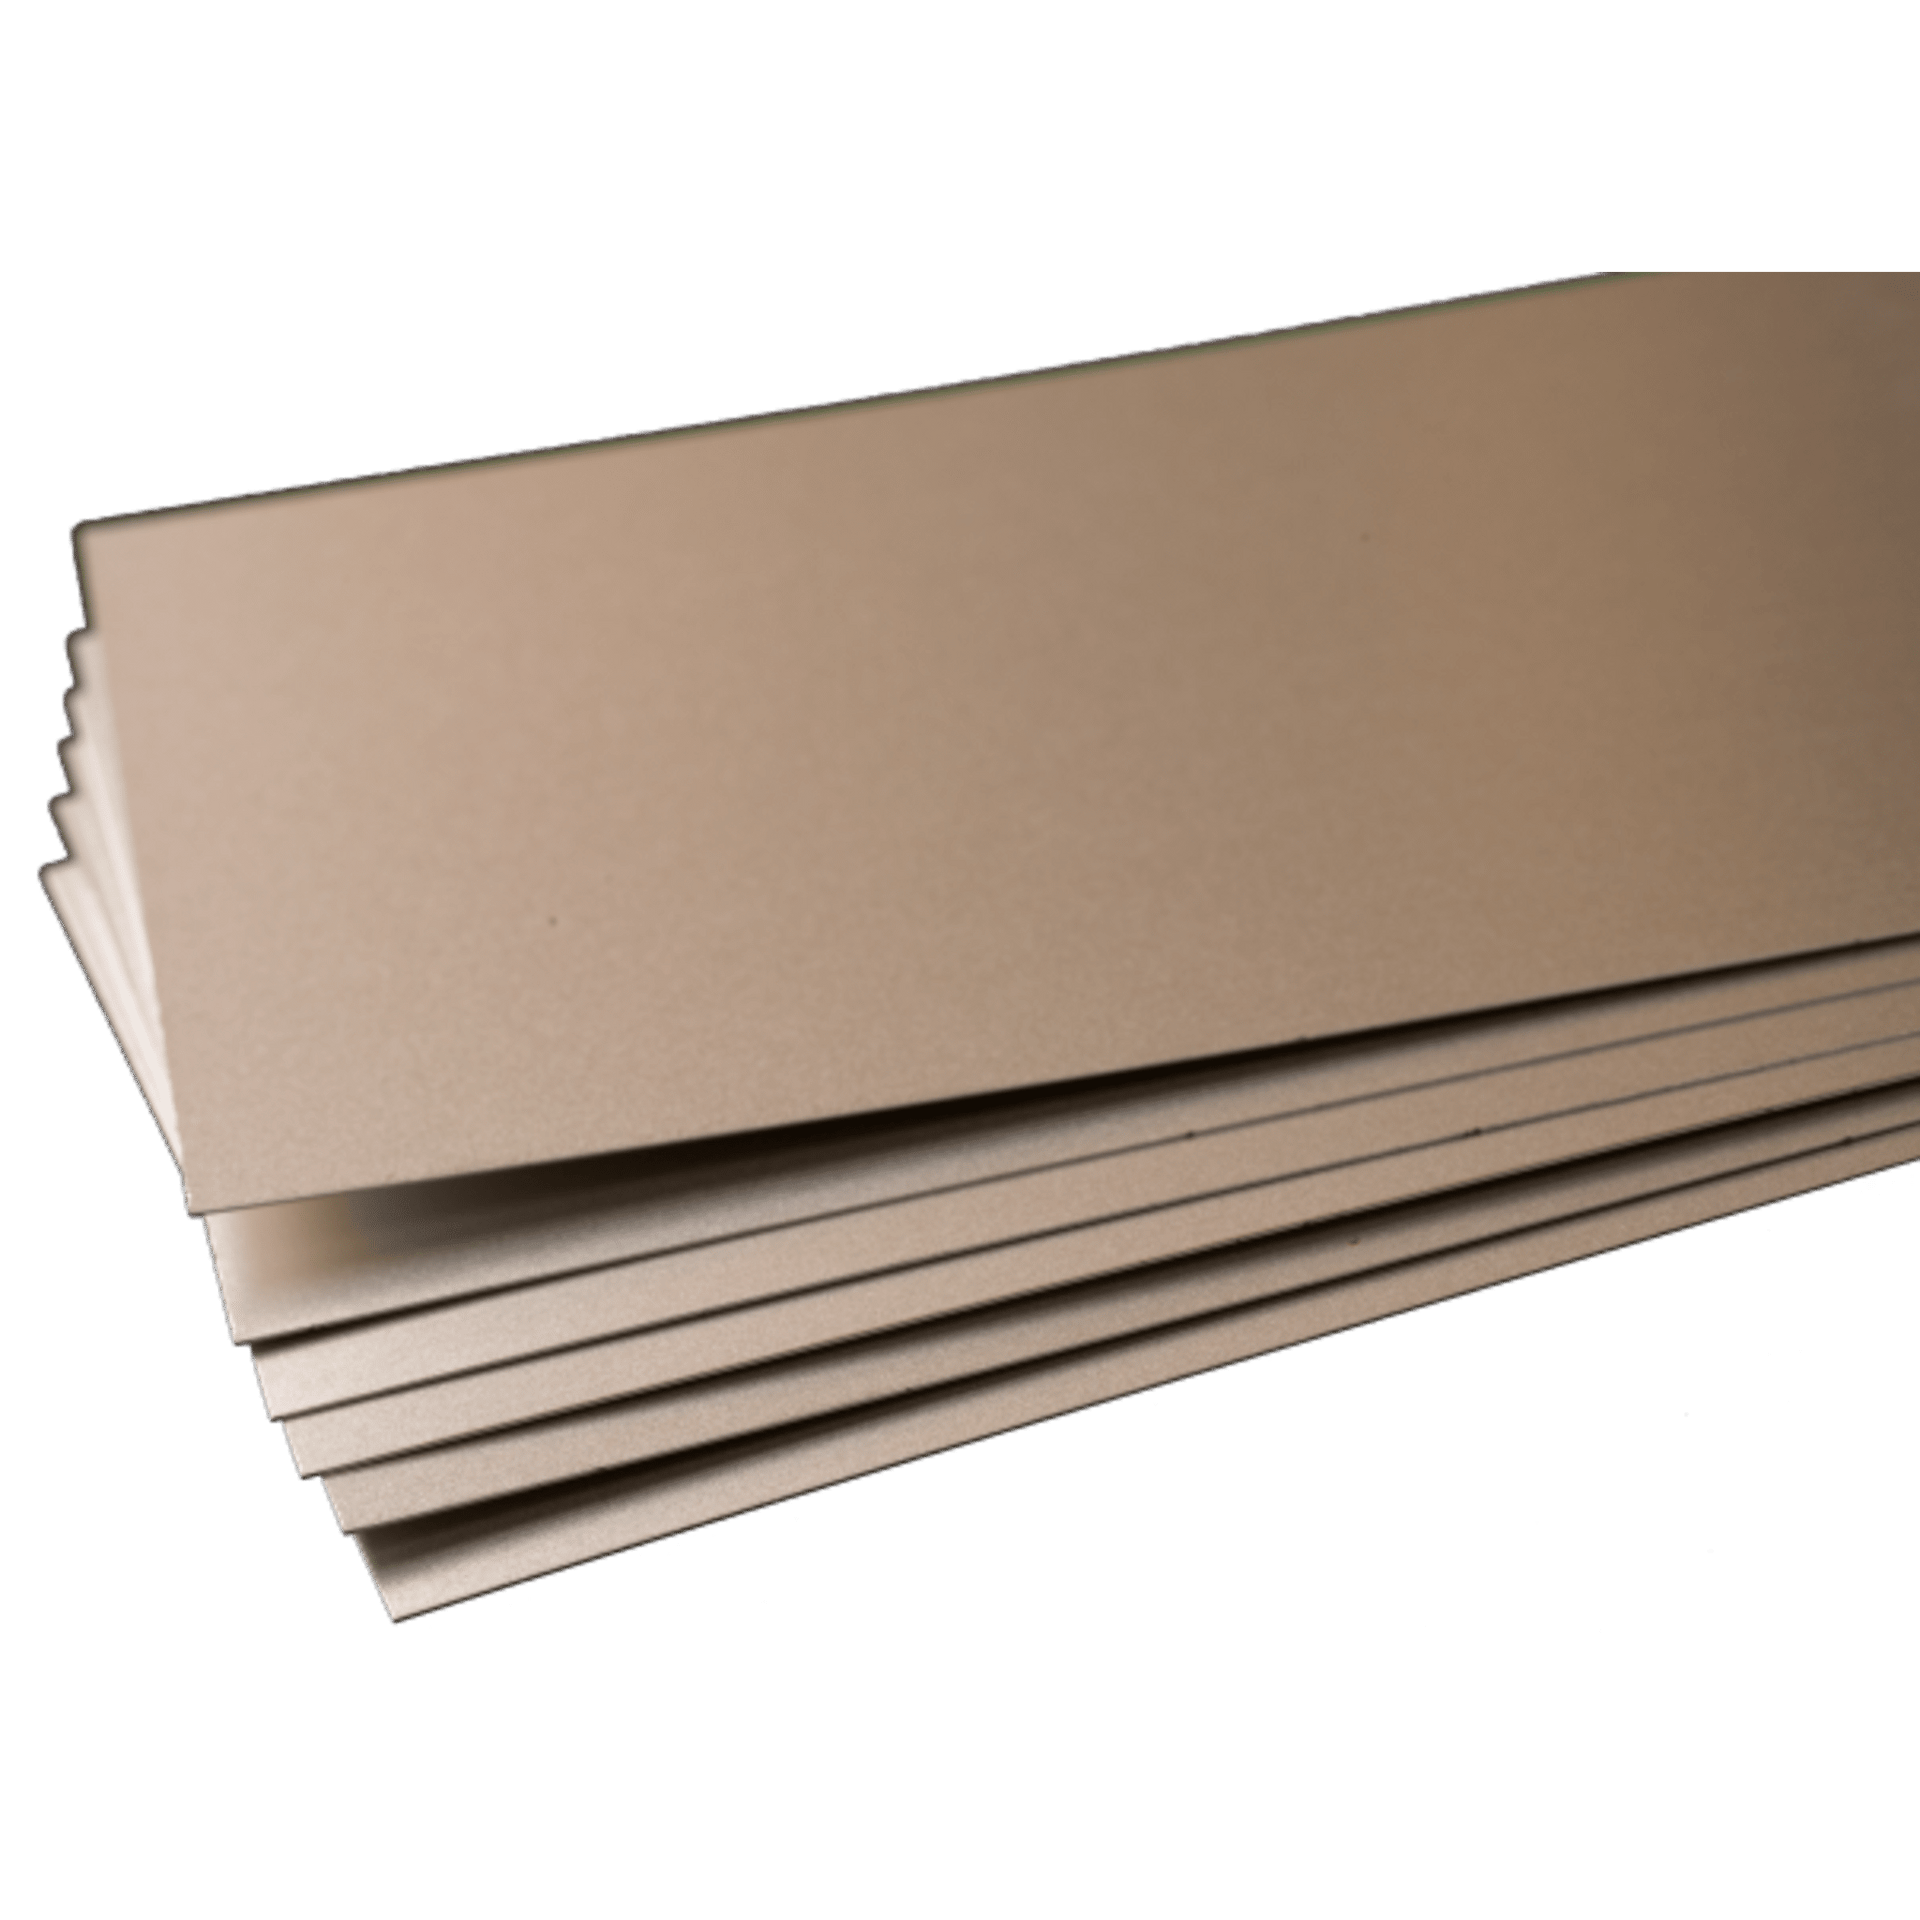 K&S .025 Thick Copper Sheet Metal (4x10in) – Aloft Hobbies